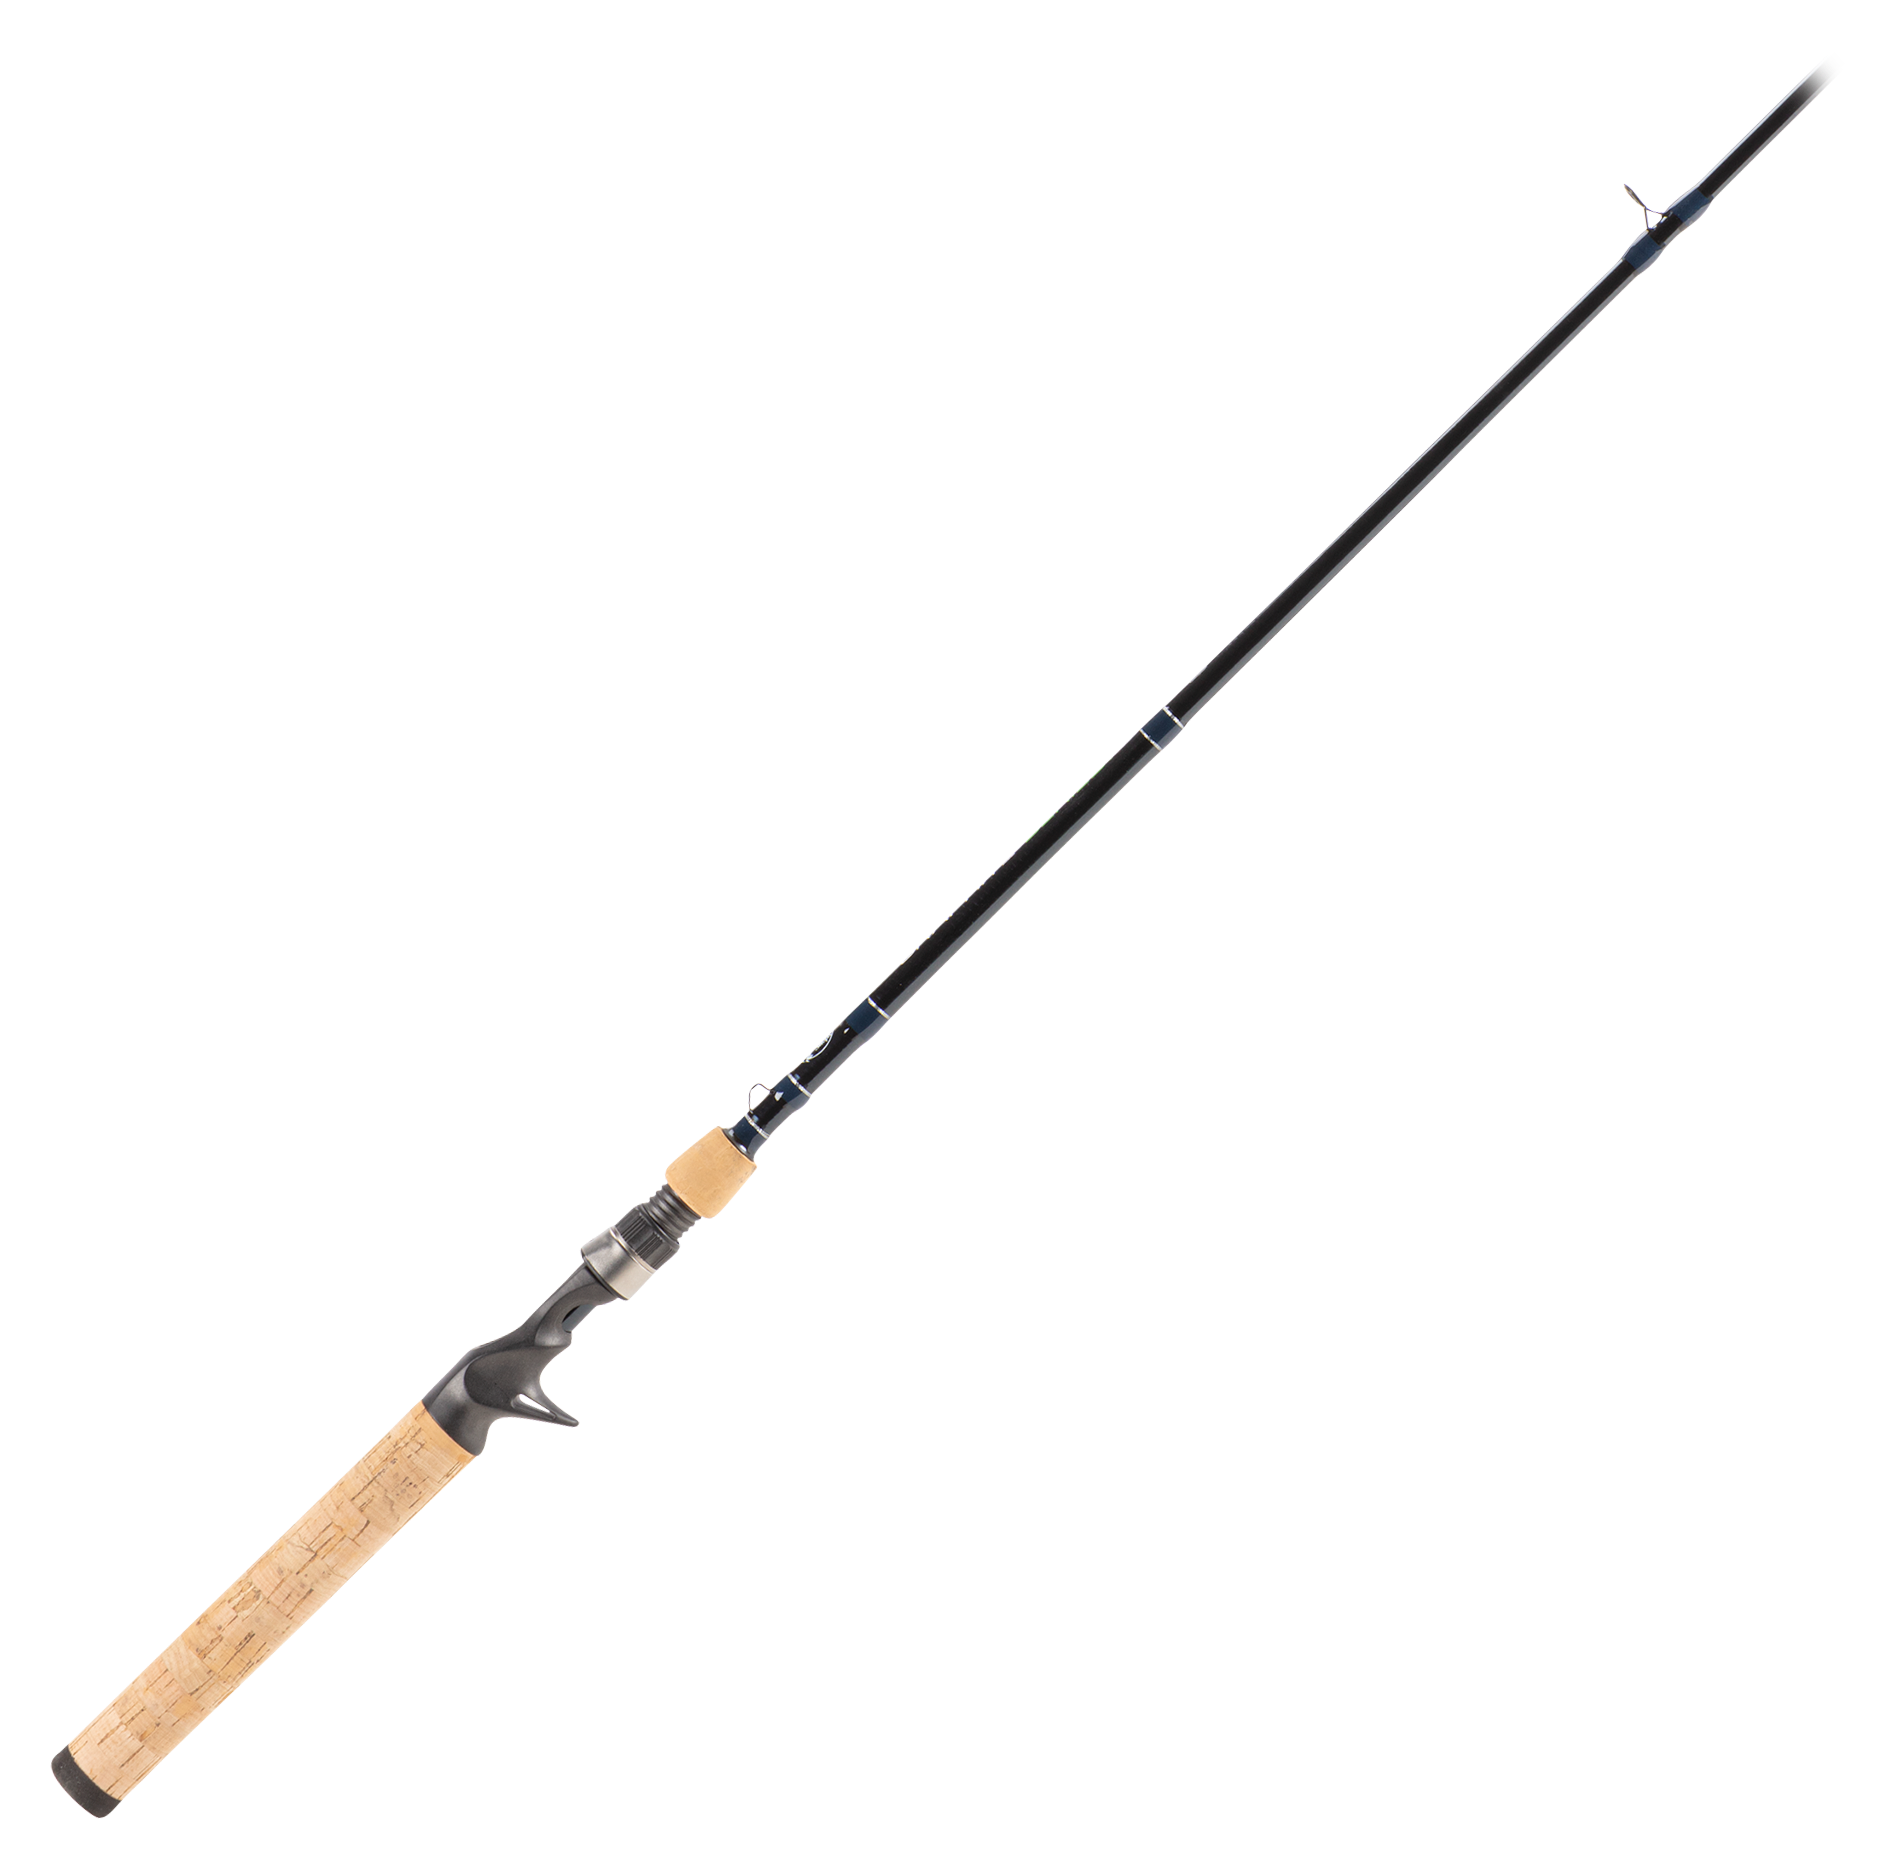 Bass Pro Shops Graphite Series Casting Rod - 6' - Medium Heavy - 1 Piece - A